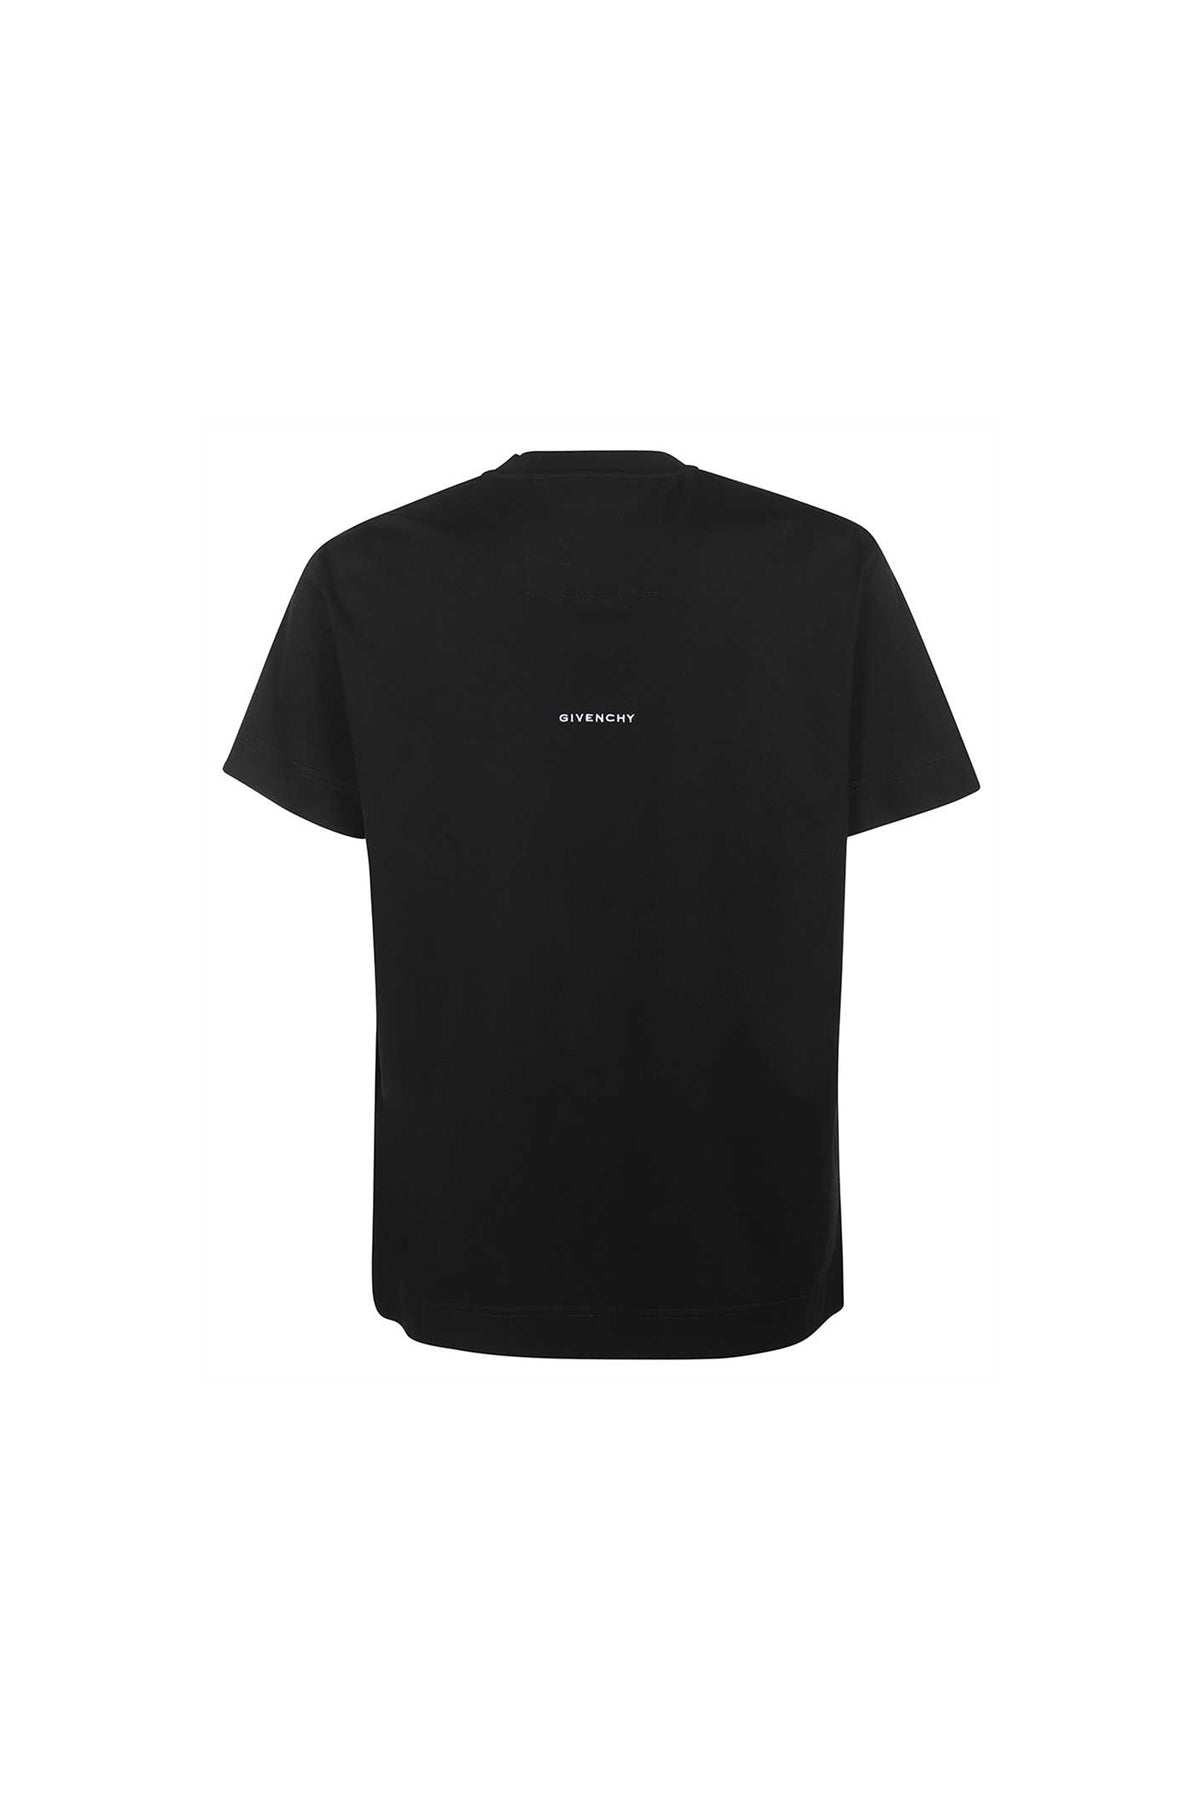 Givenchy Logo Black T-shirt